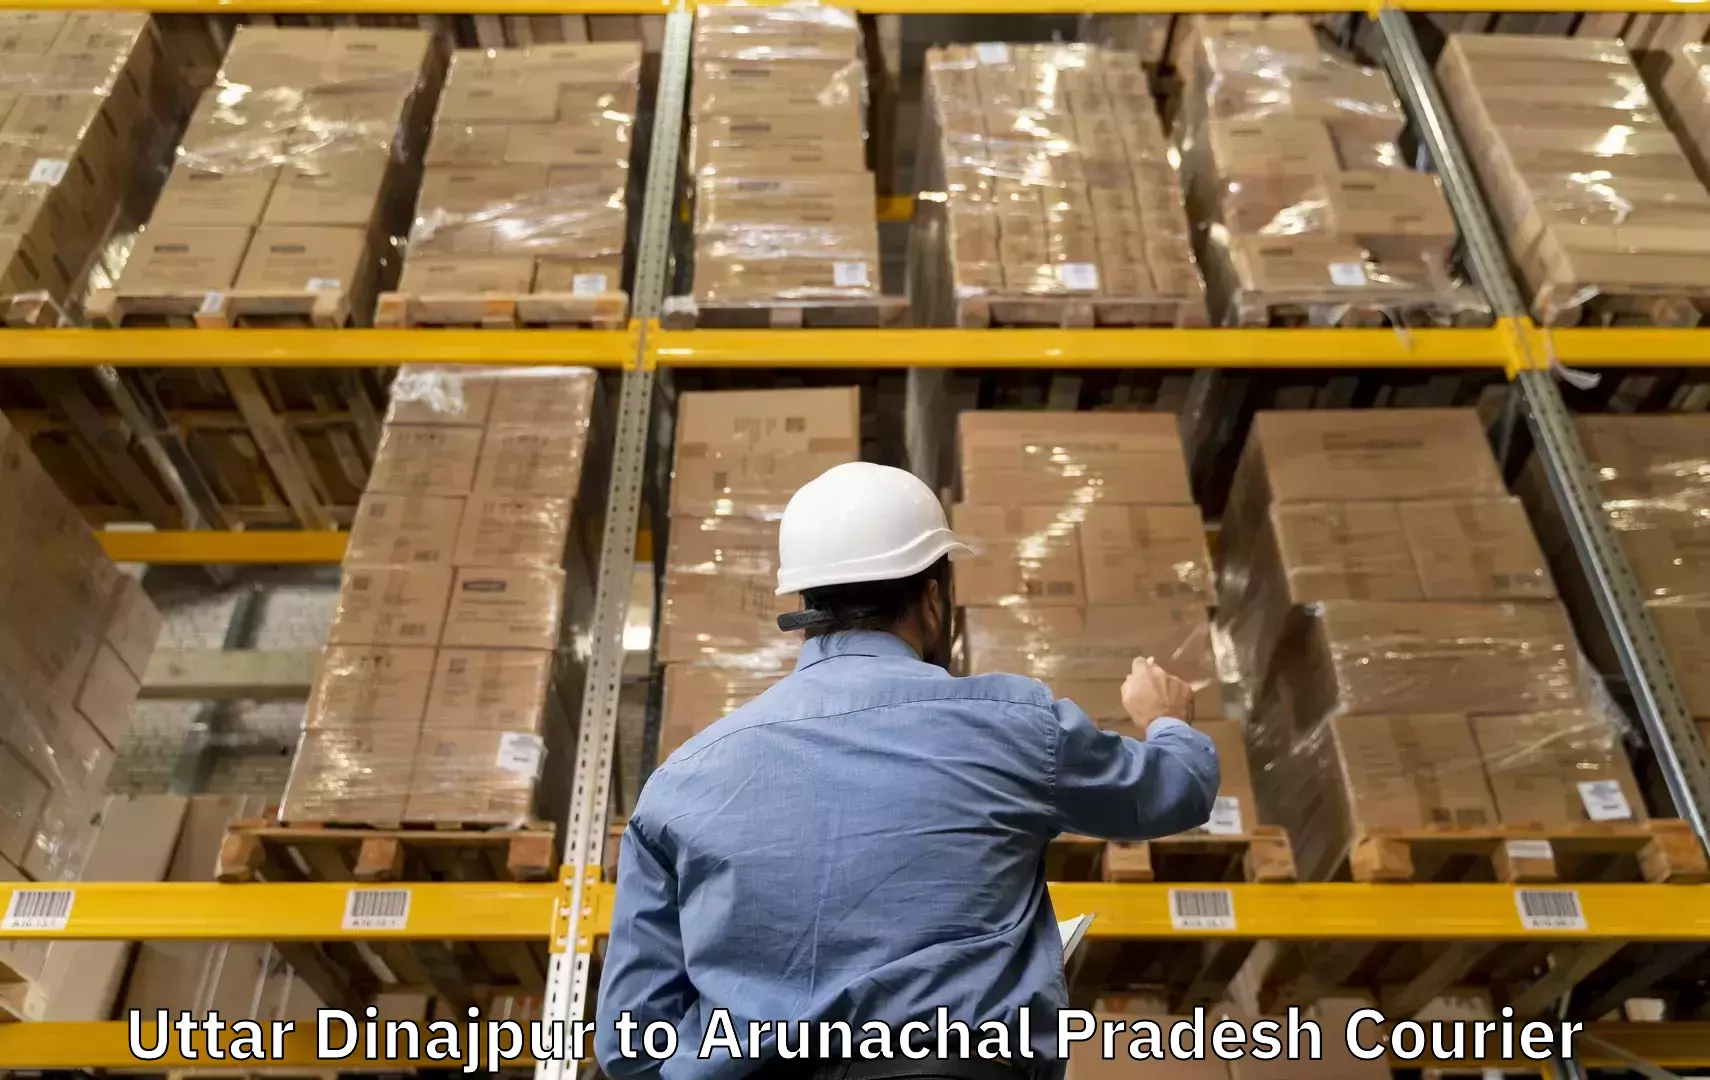 Luggage shipment specialists Uttar Dinajpur to Pasighat